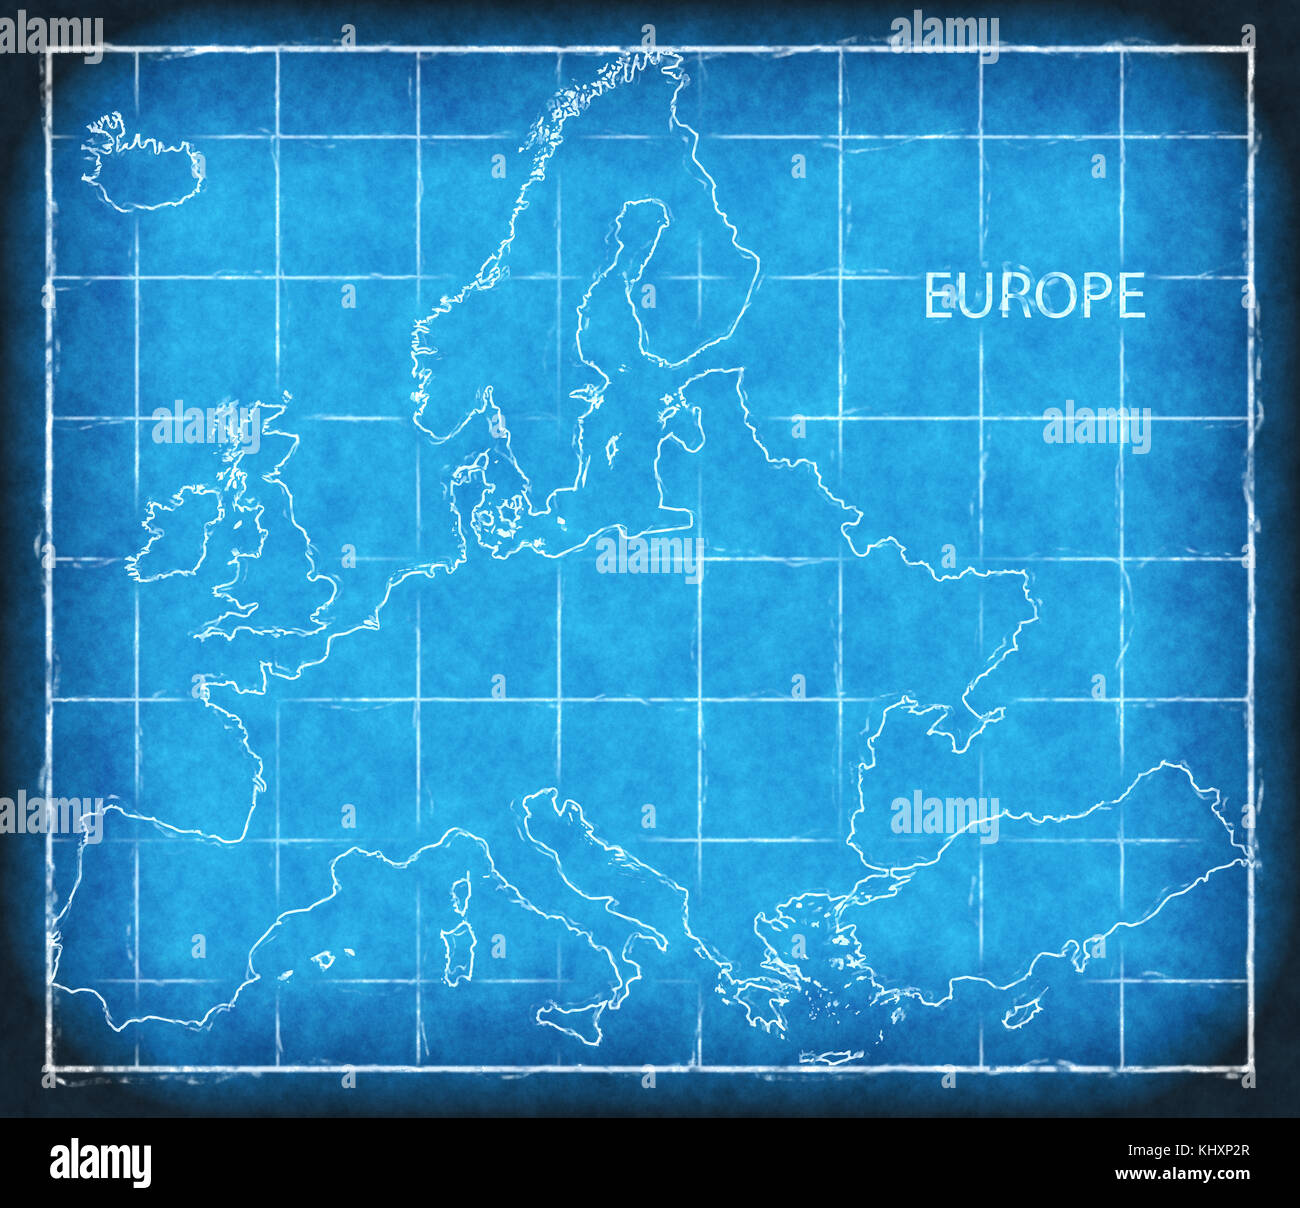 Europe map blue print artwork illustration silhouette Stock Photo